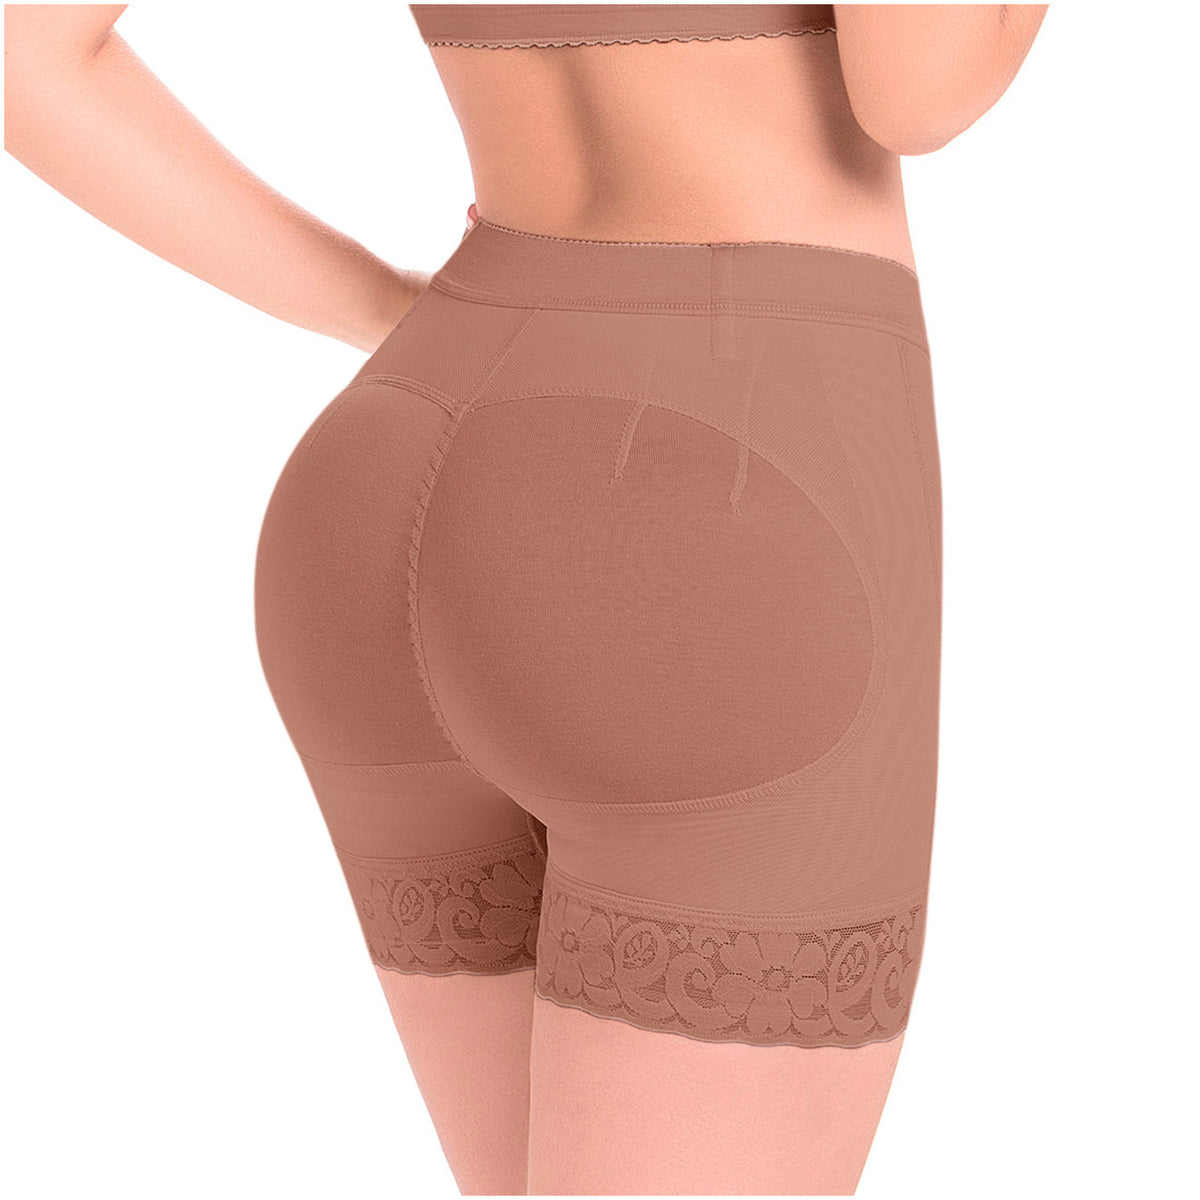 Fajas MariaE FU101 High-Waisted Tummy Control Shorts For Women